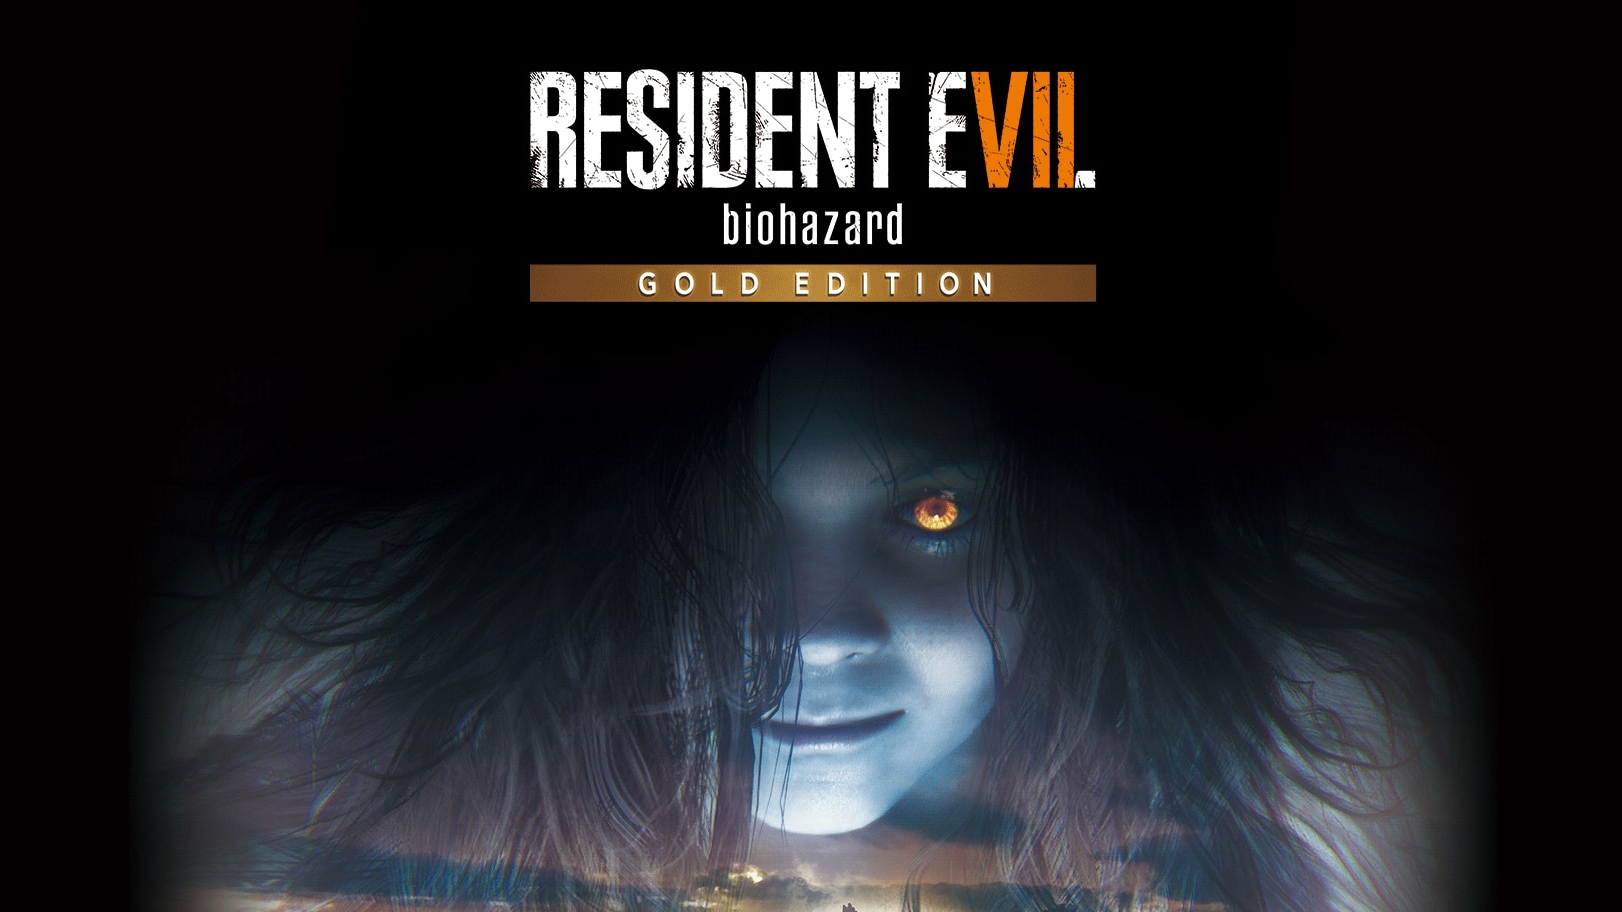 Resident Evil Village - PS4 - Playstation 4 - NUEVO Nicaragua